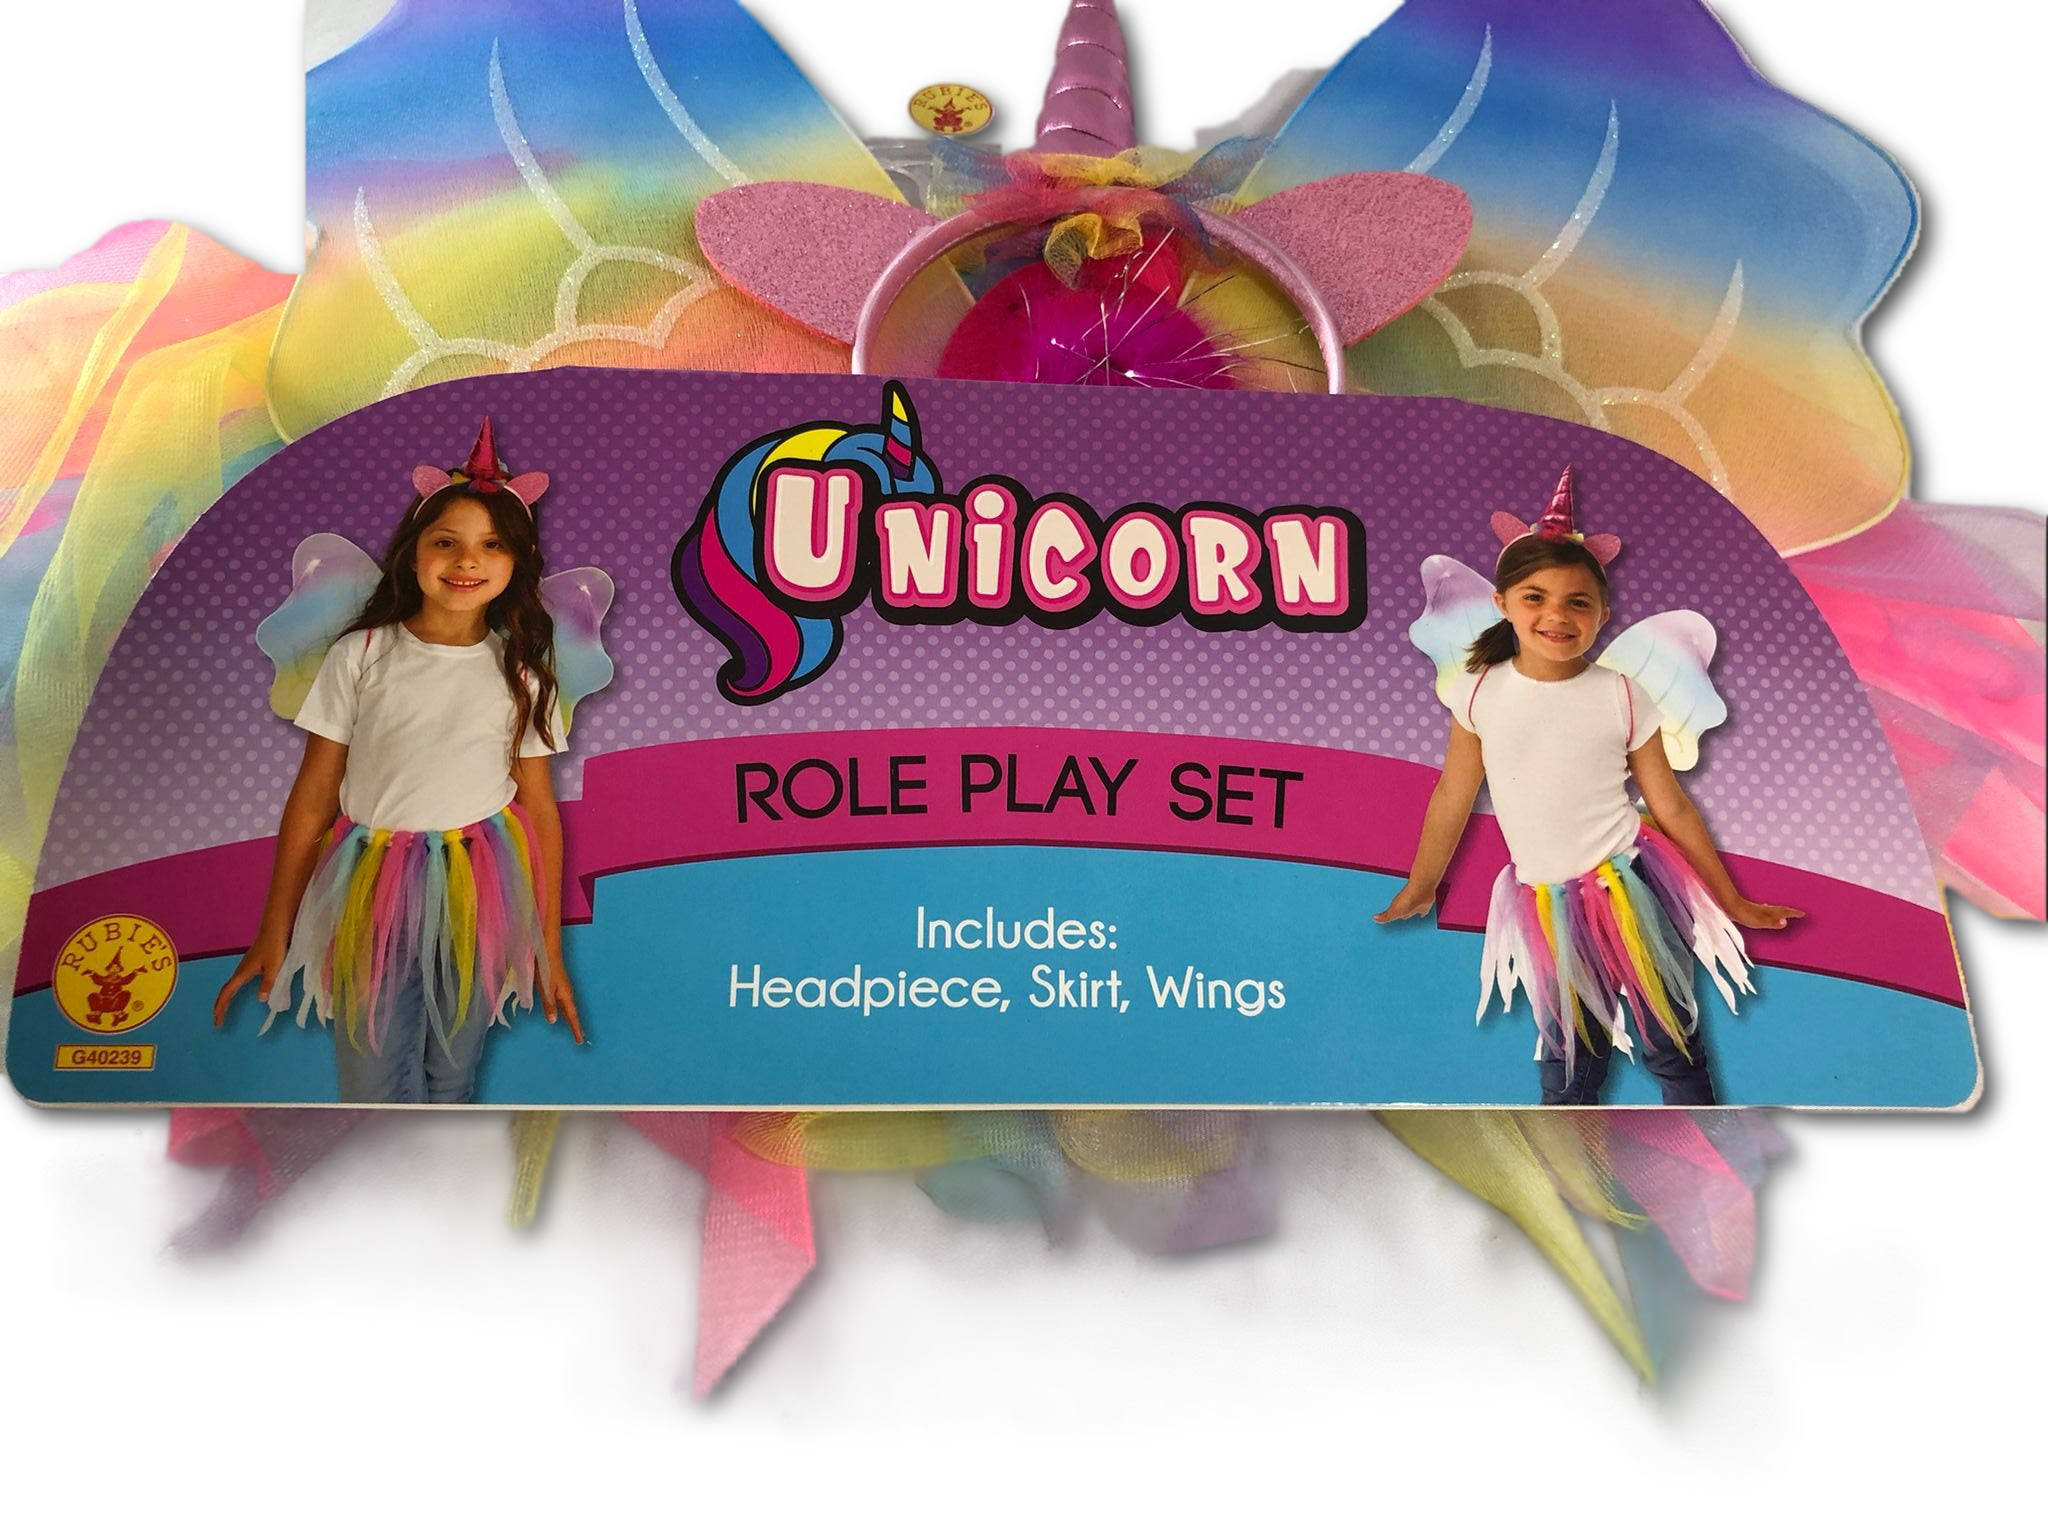 Unicorn Dress Up Set for Kids - Imagine by Rubie's (Medium Size)